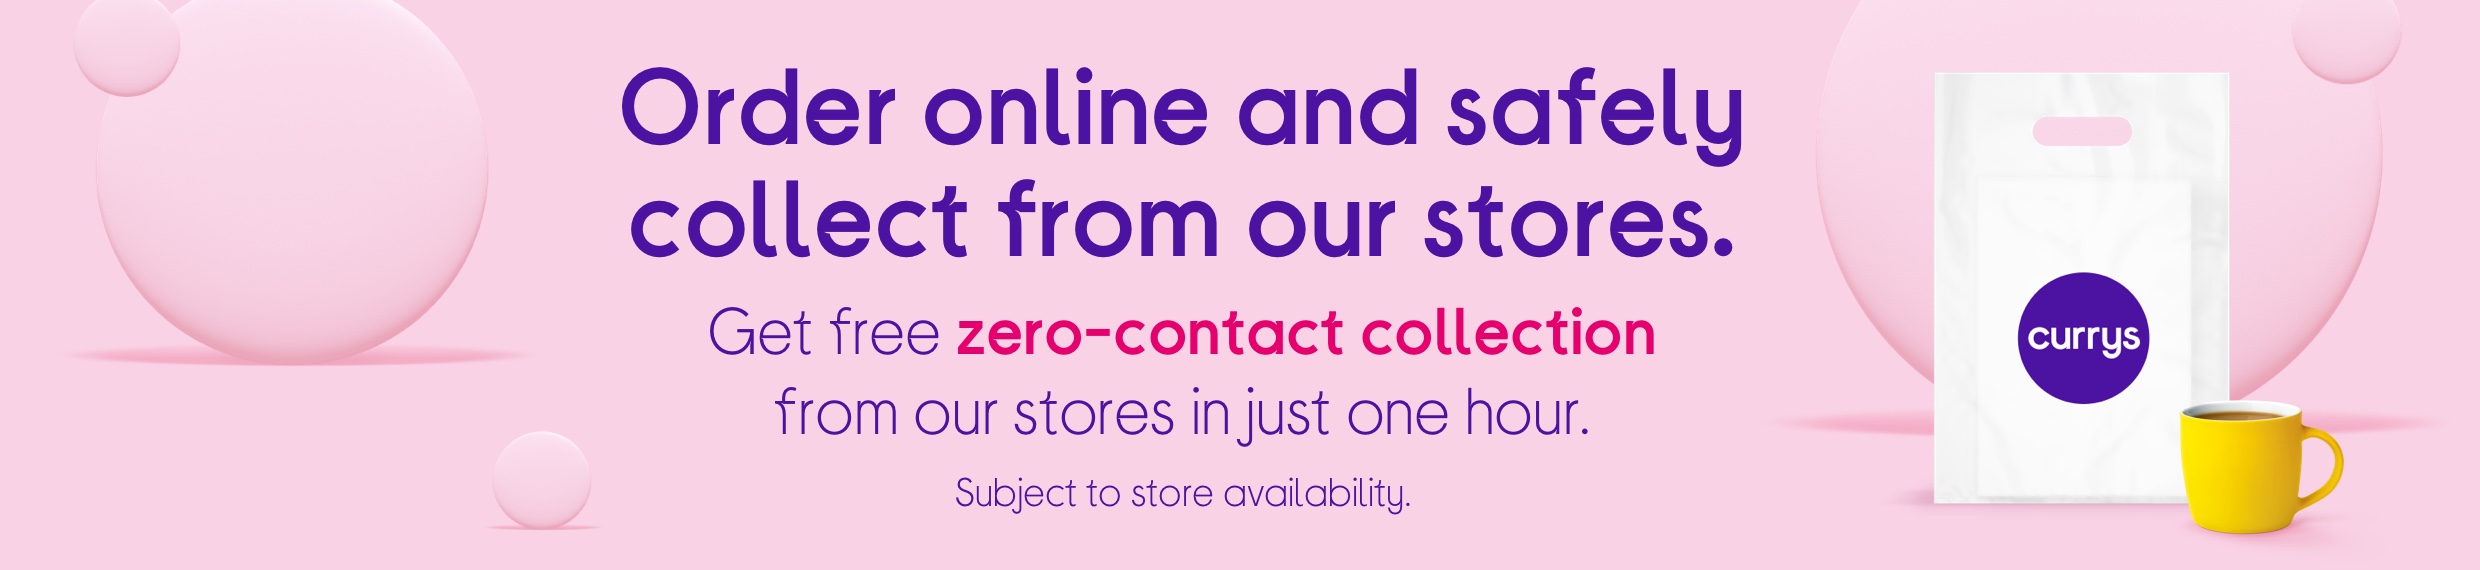 Order online safely collect instore